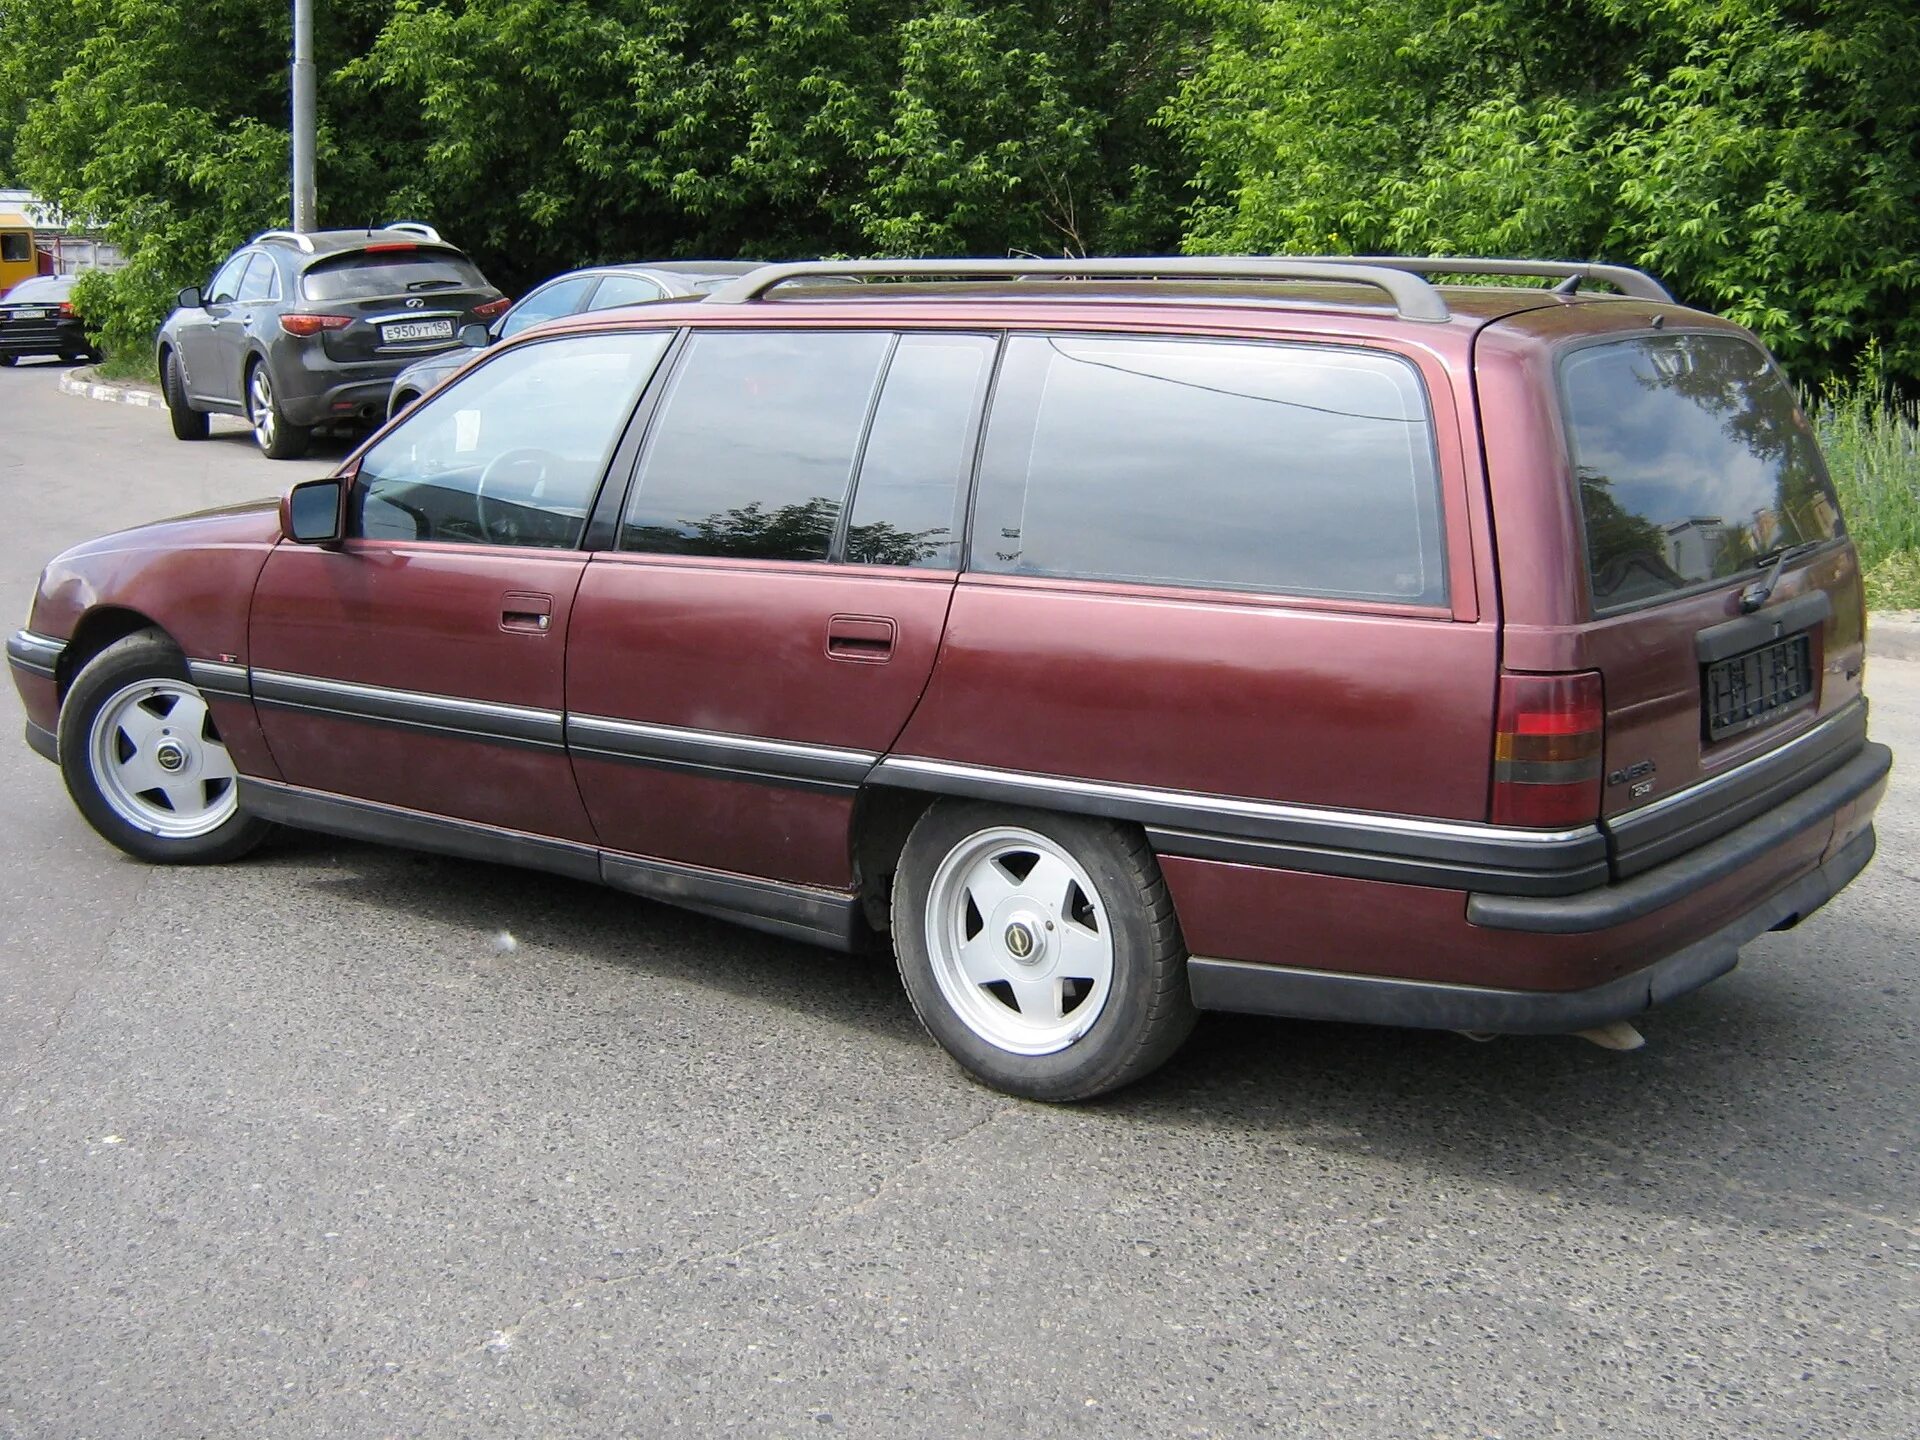 Opel Omega a Caravan. Opel Omega 1992 универсал. Опель Омега Караван 2 1989. Опель Омега 1986 универсал.